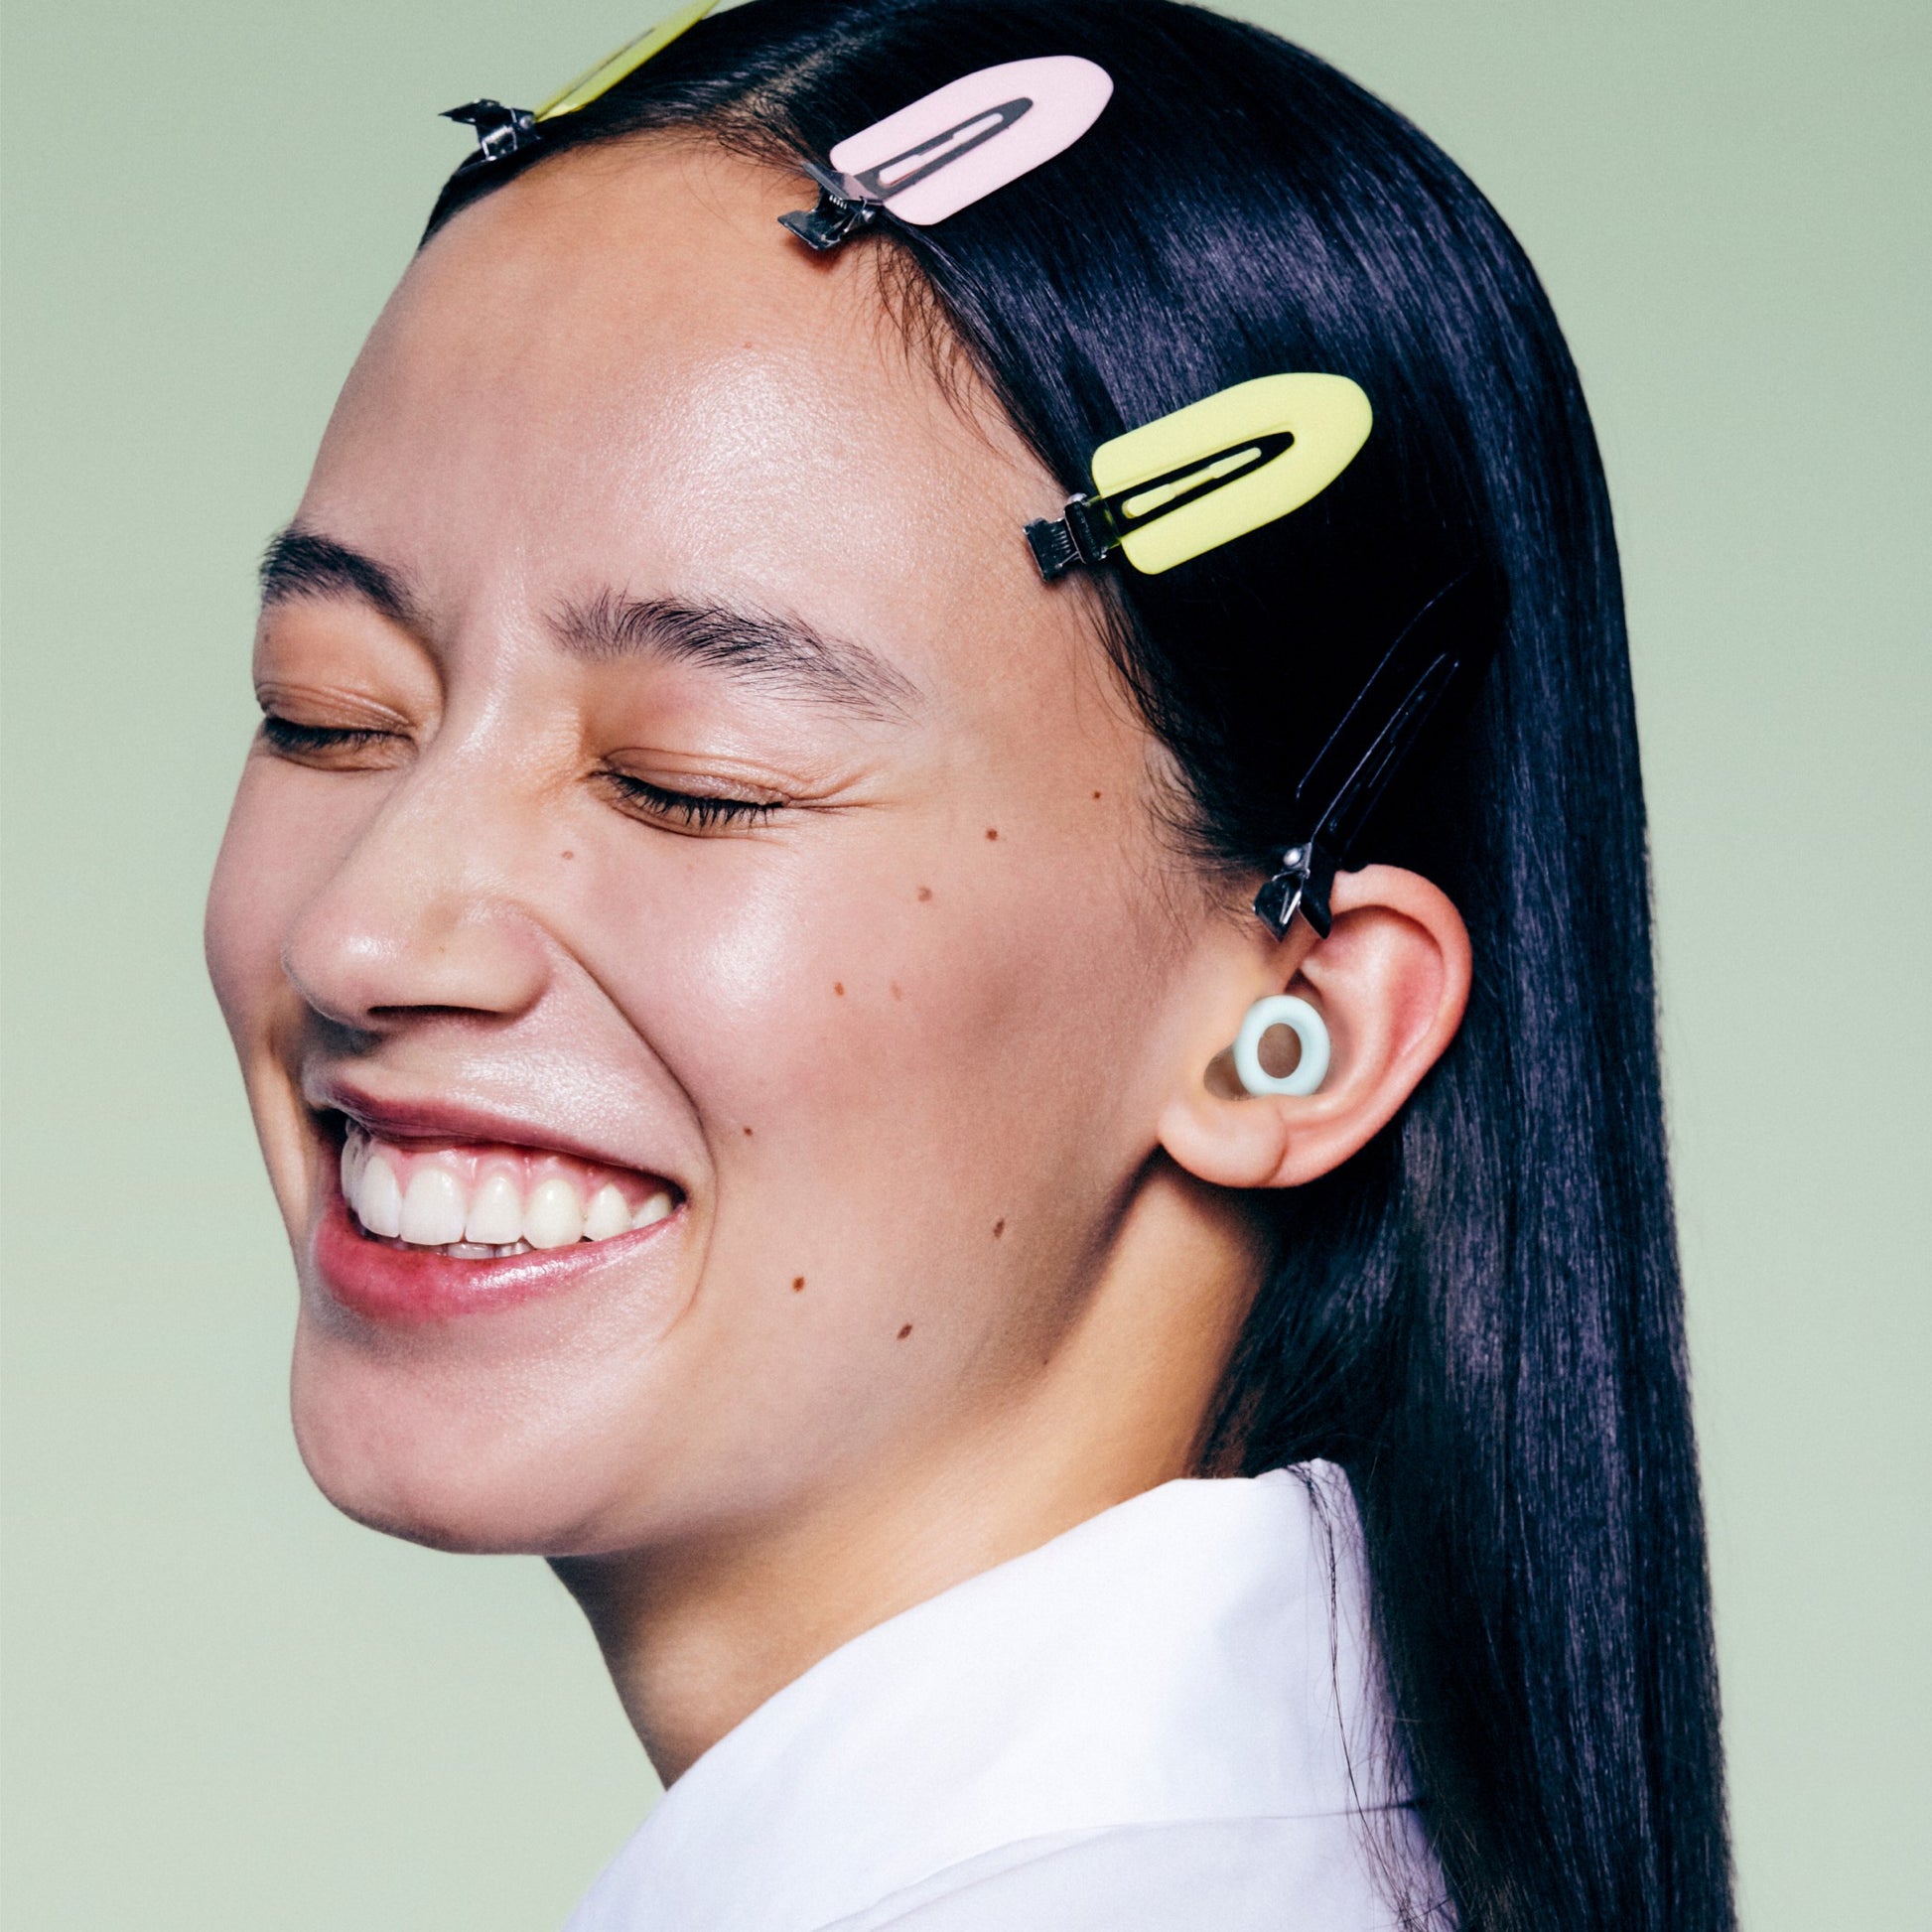 Loop Quiet Solstice Ear Plugs – Super Soft, Reusable Hearing